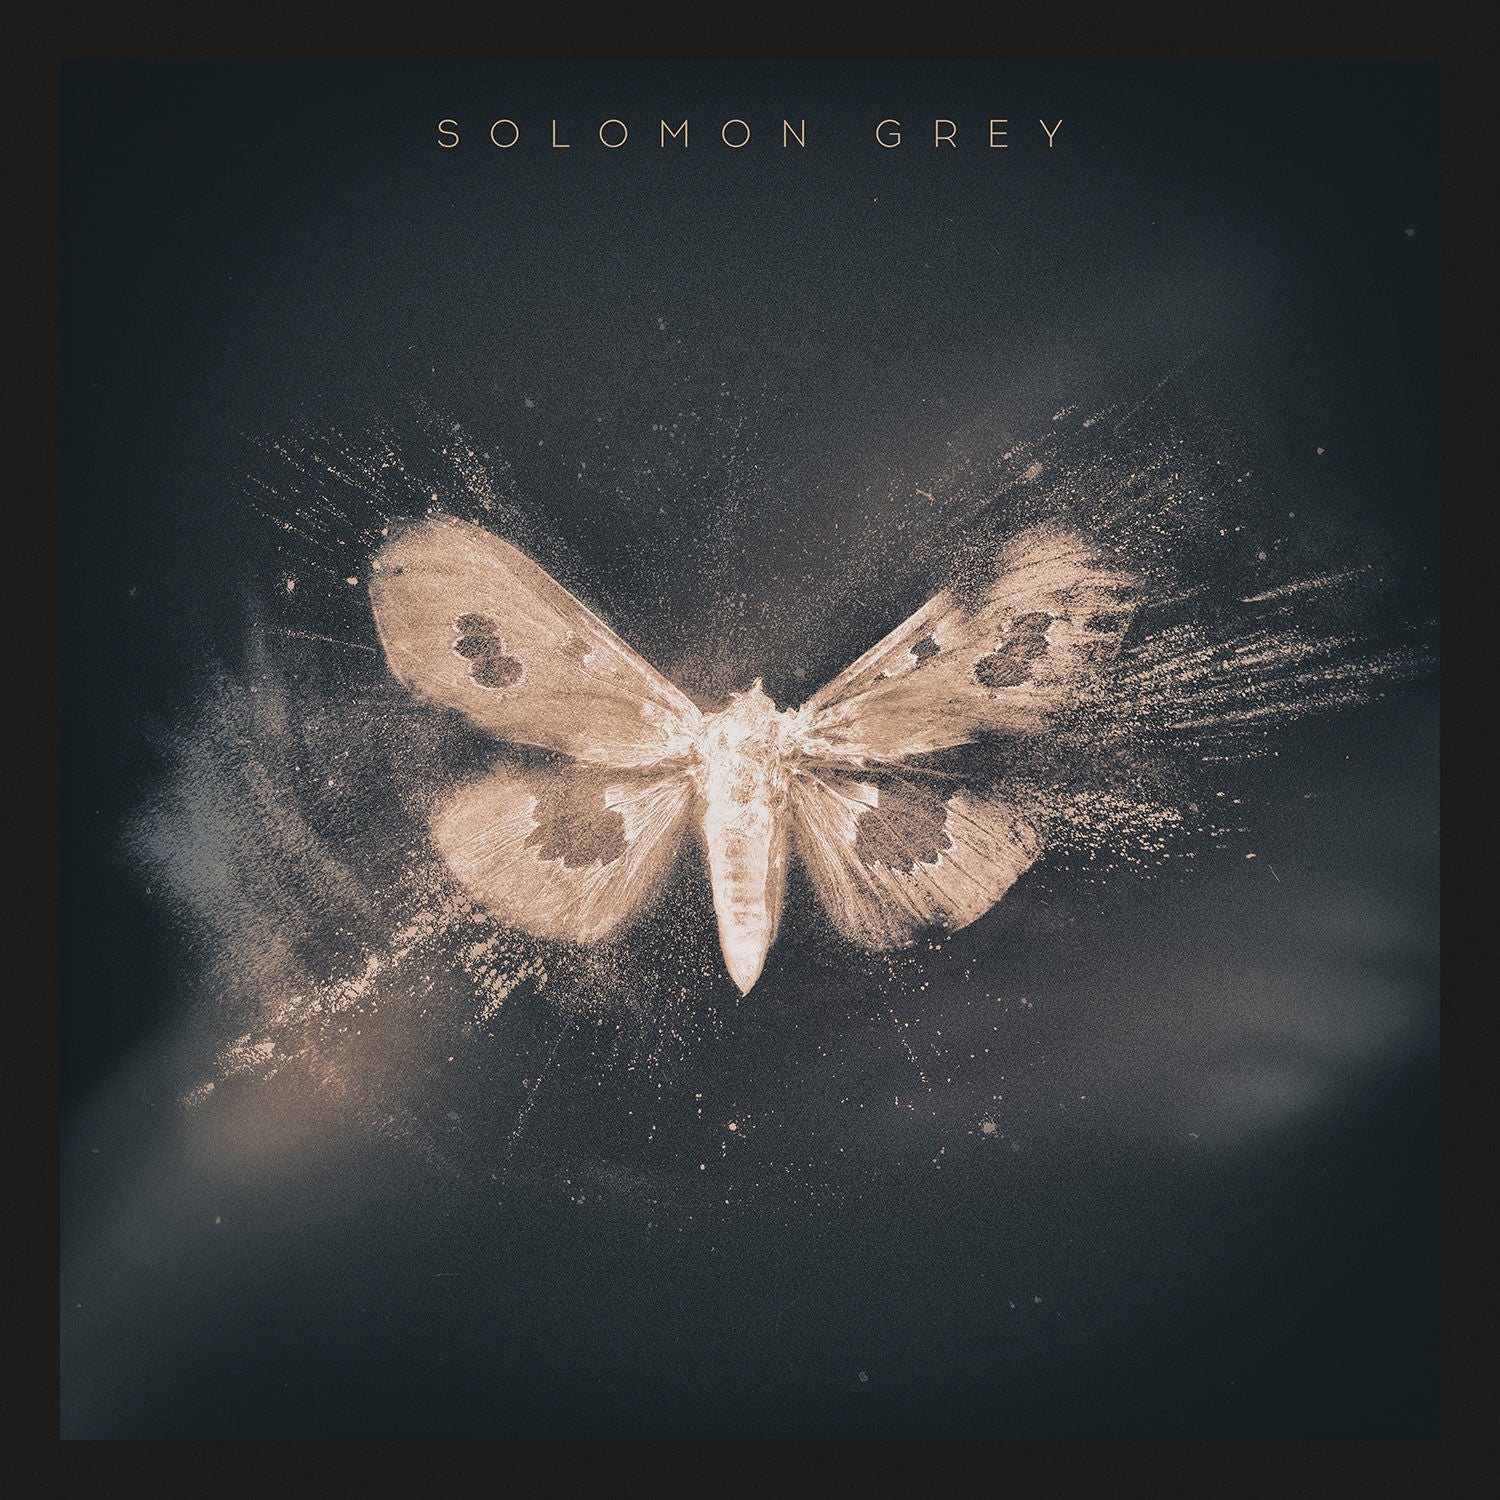 Solomon Grey - Exclusive 12” x 12” print of the album artwork